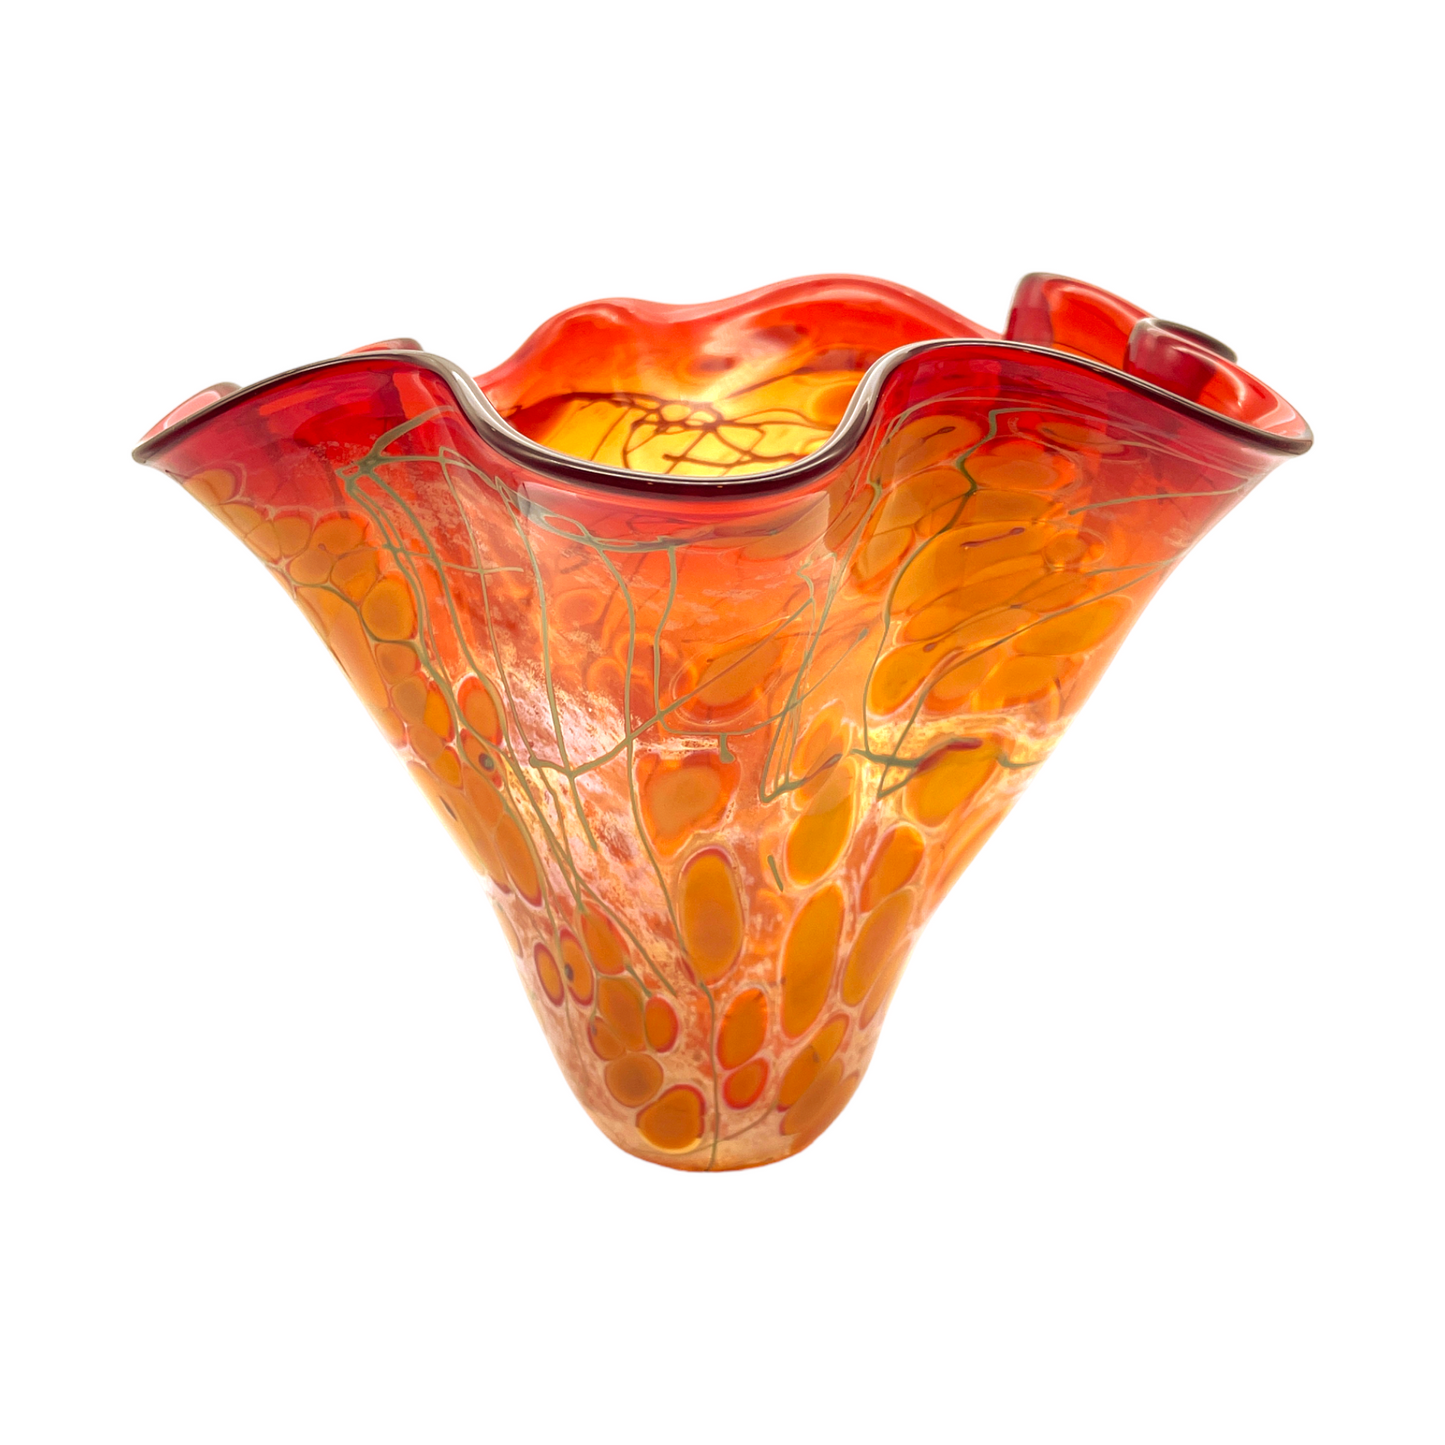 Ethereal Elegance: The Signature Handkerchief Vase by Paul Bendzunas